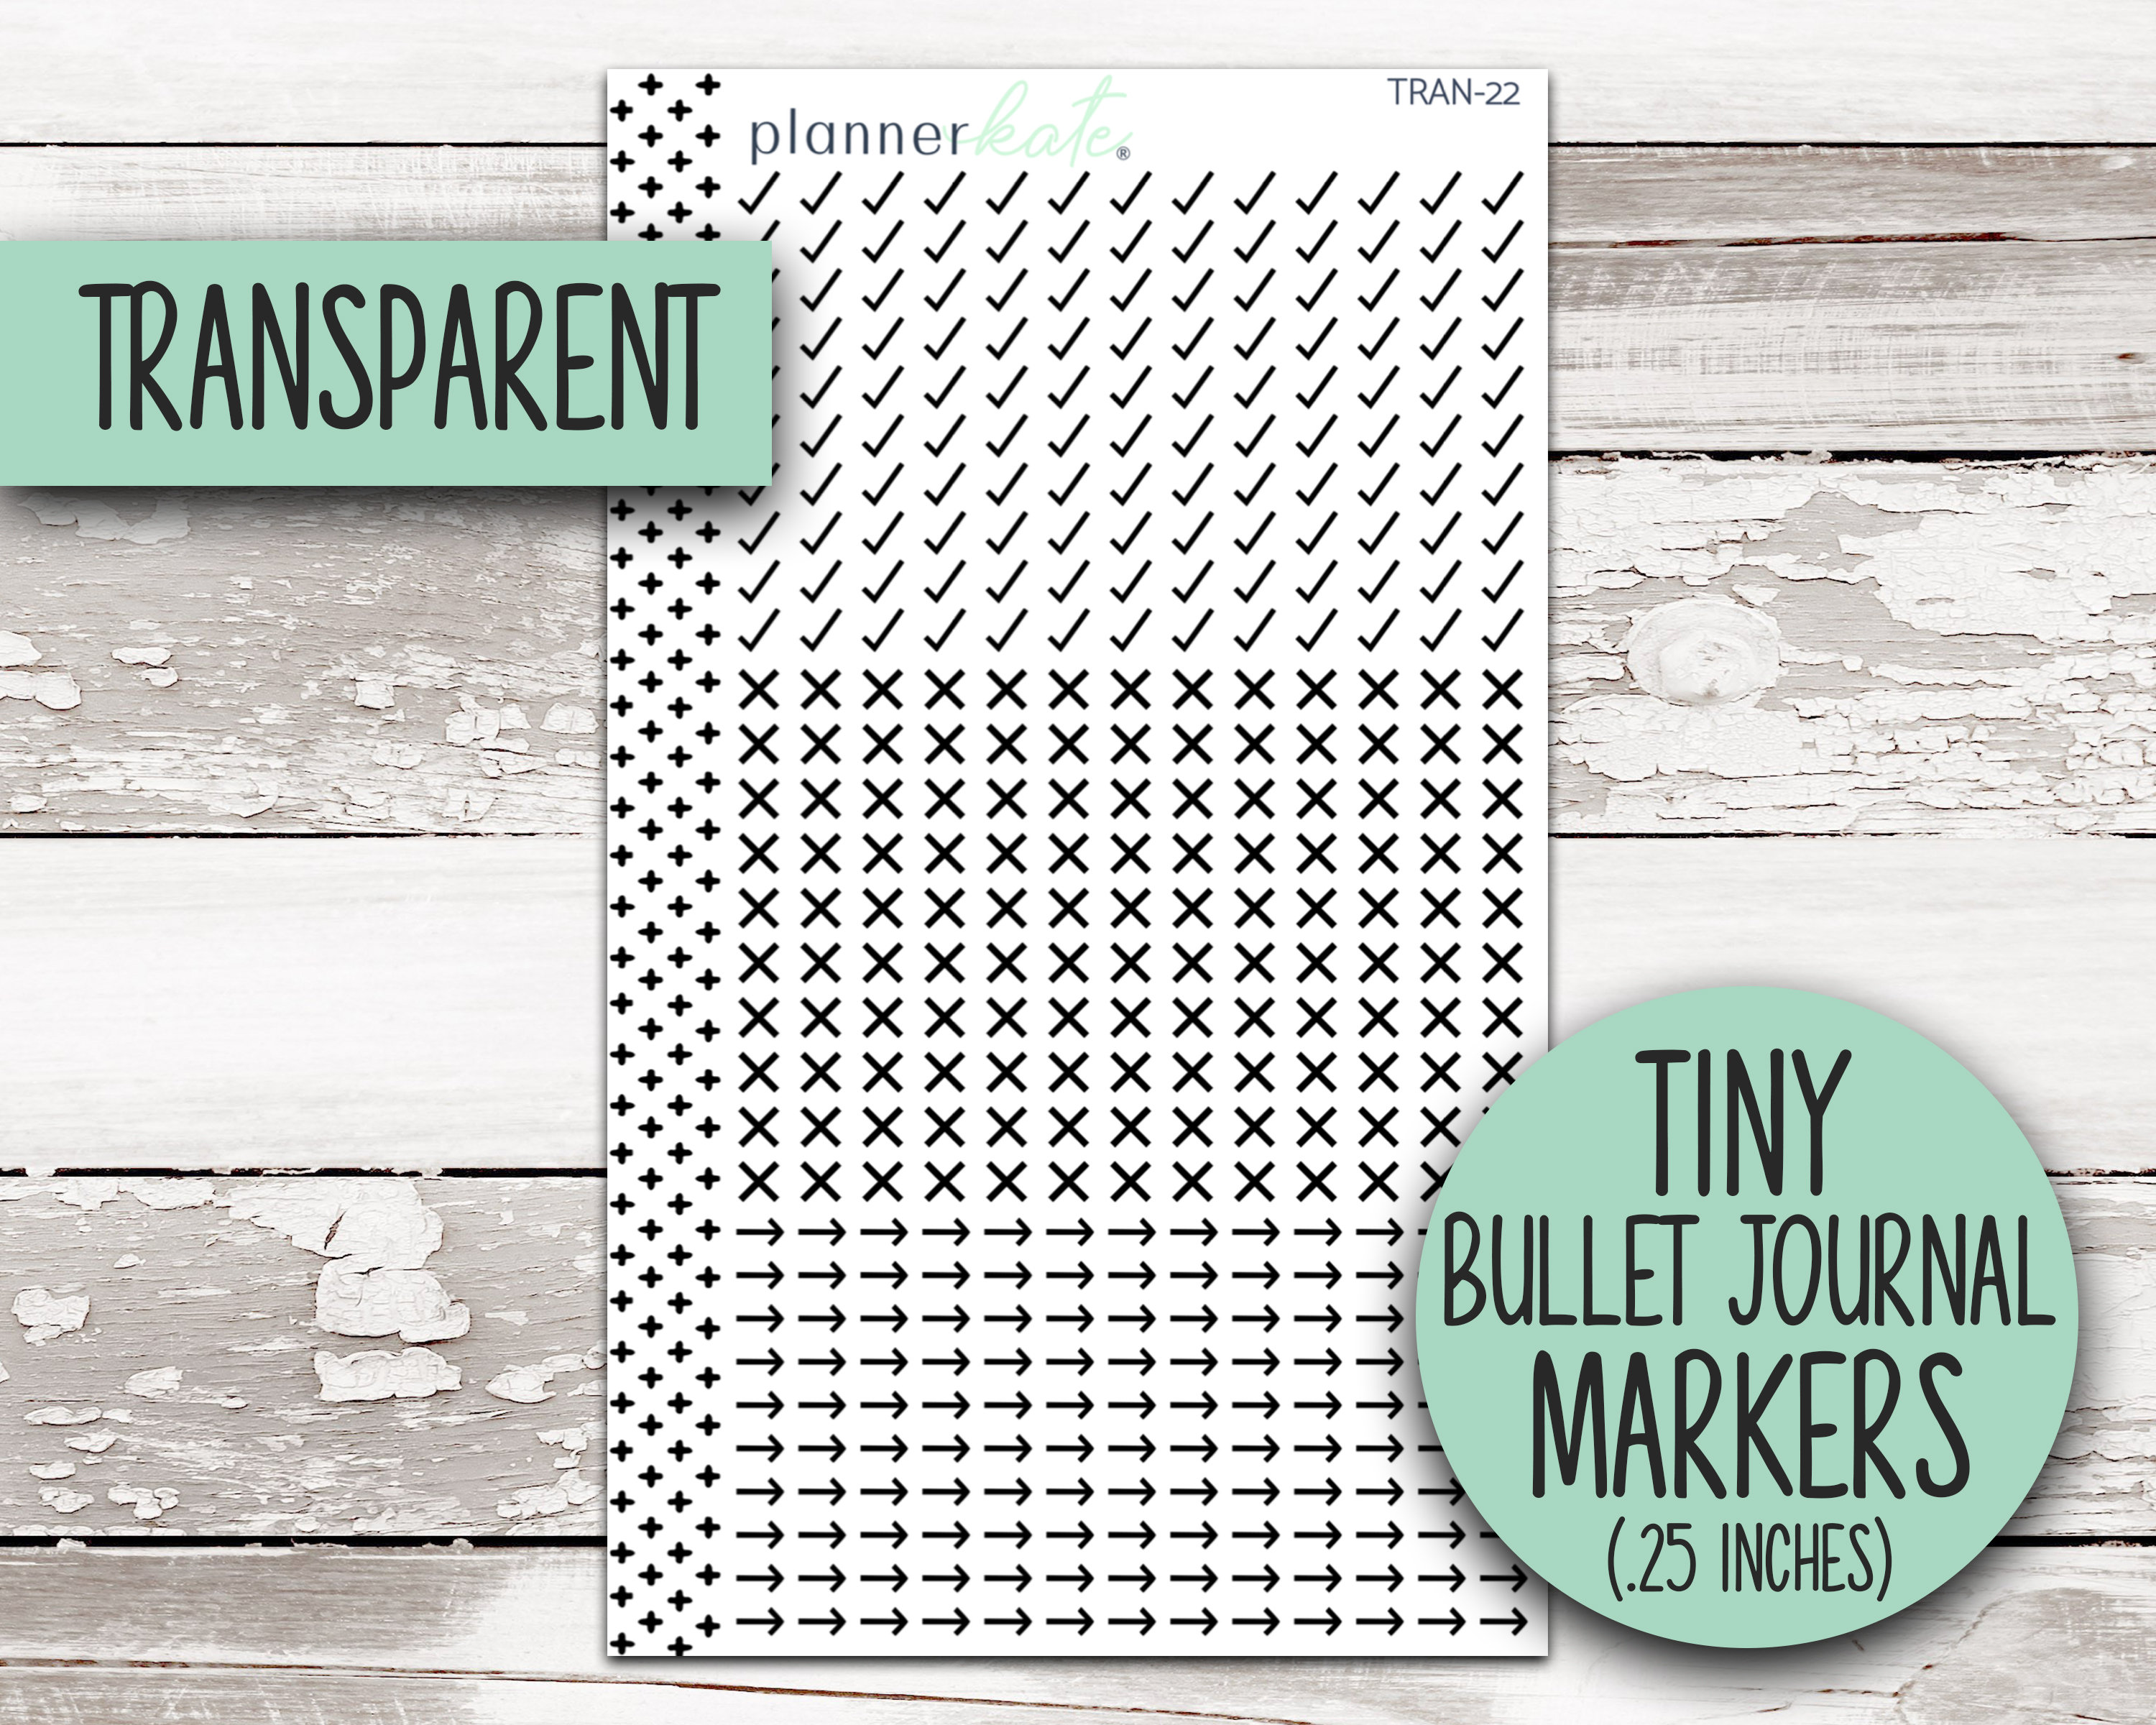 TRAN-22 Tiny Transparent BULLET JOURNAL Markers 